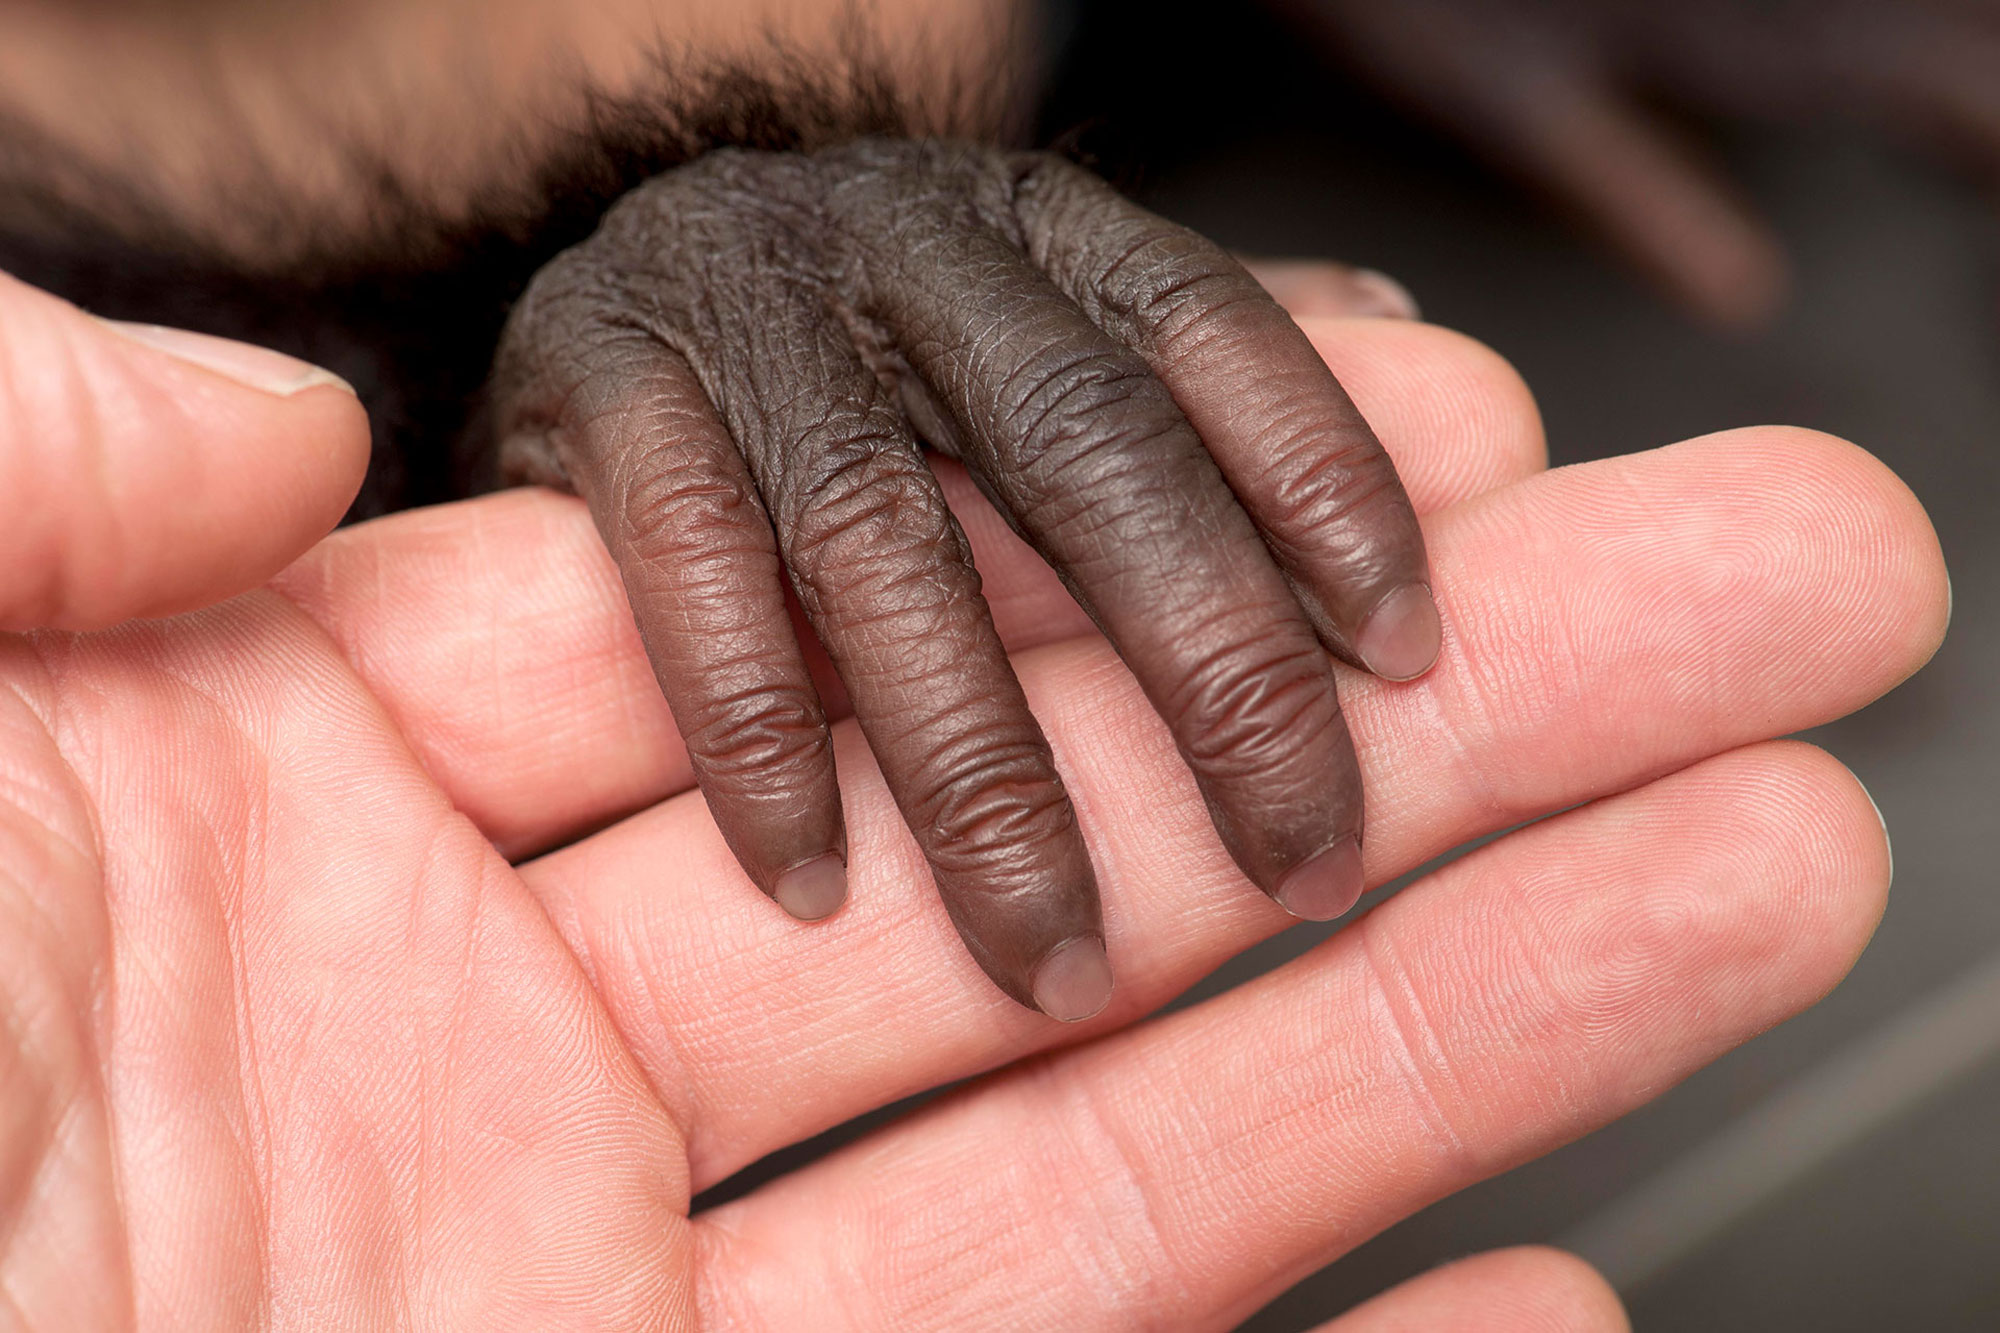 Primate hand on human hand